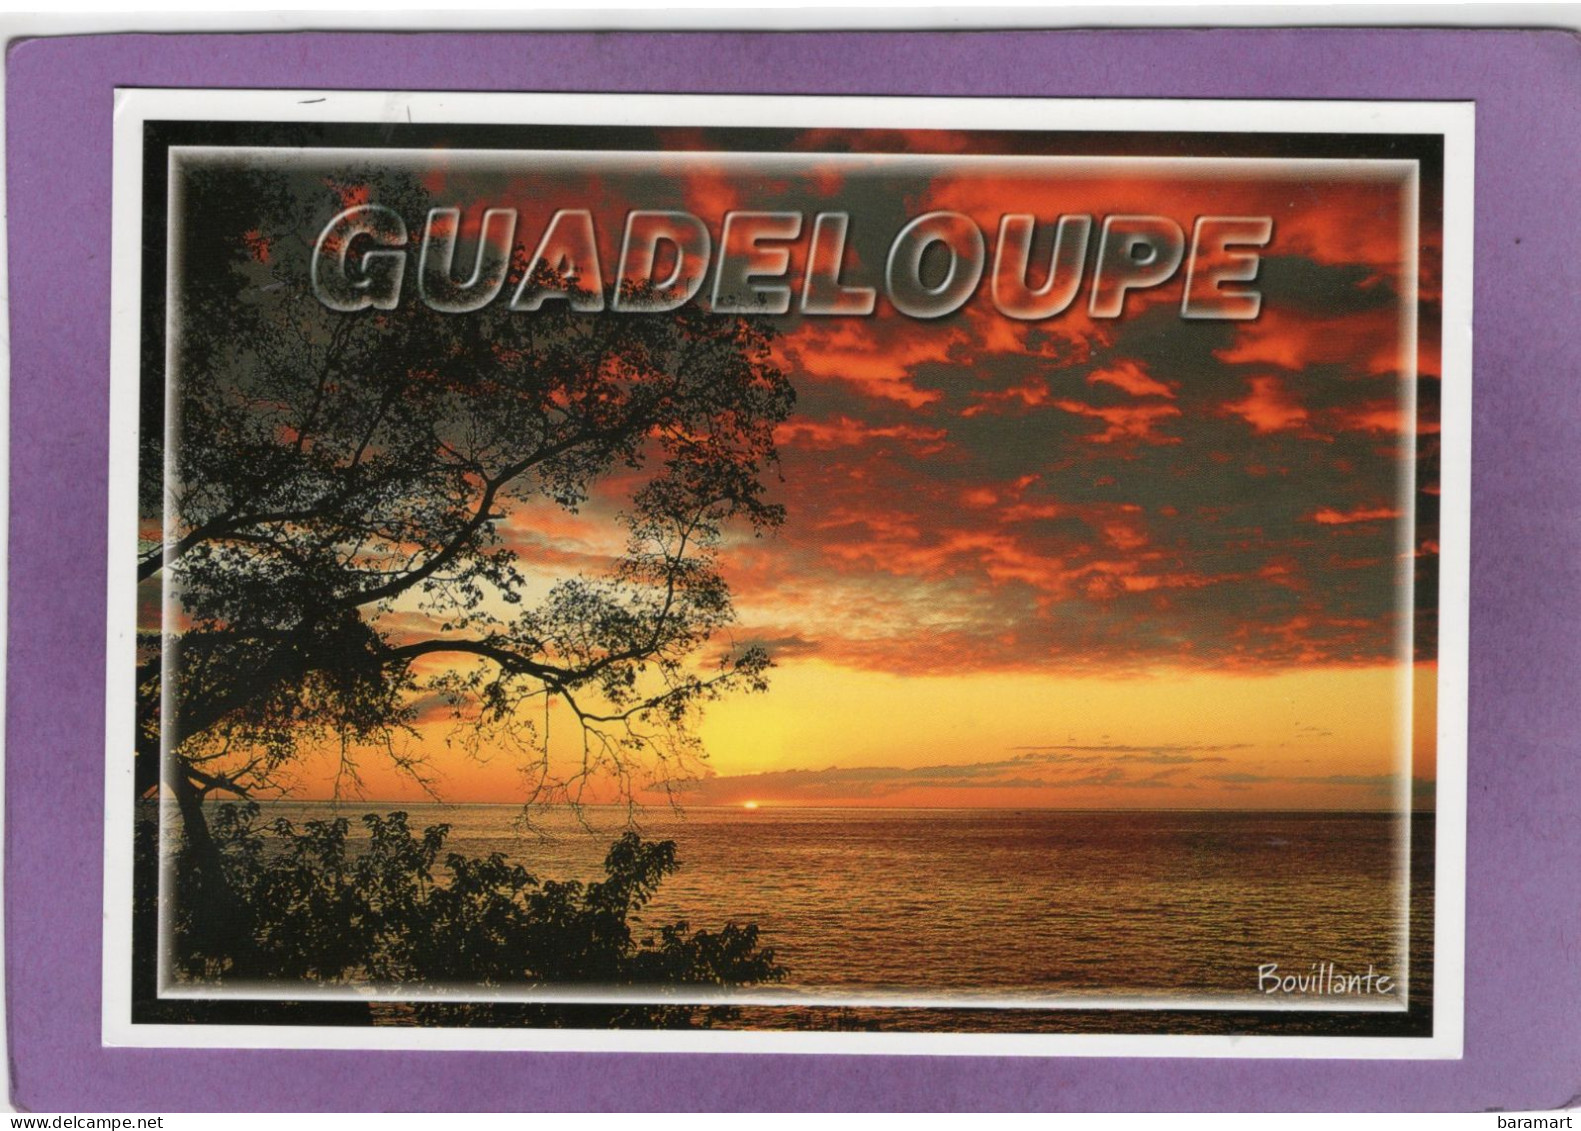 97 971 Guadeloupe Basse Terre Coucher De Soleil à Bouillante - Basse Terre